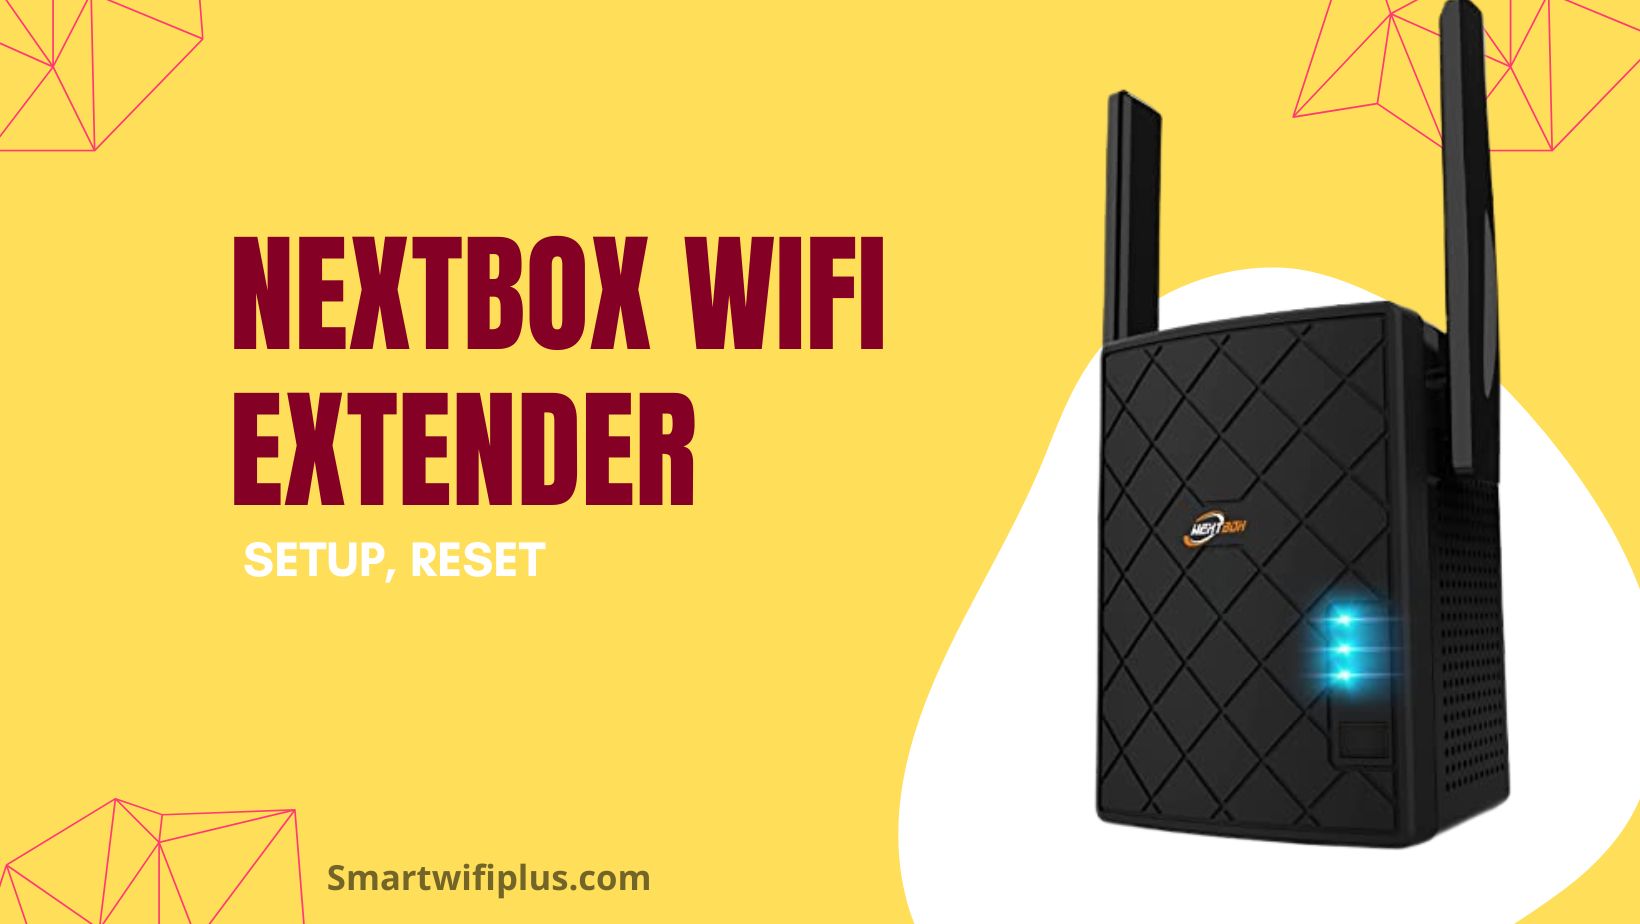 How to Setup Nextbox WiFi Extender?